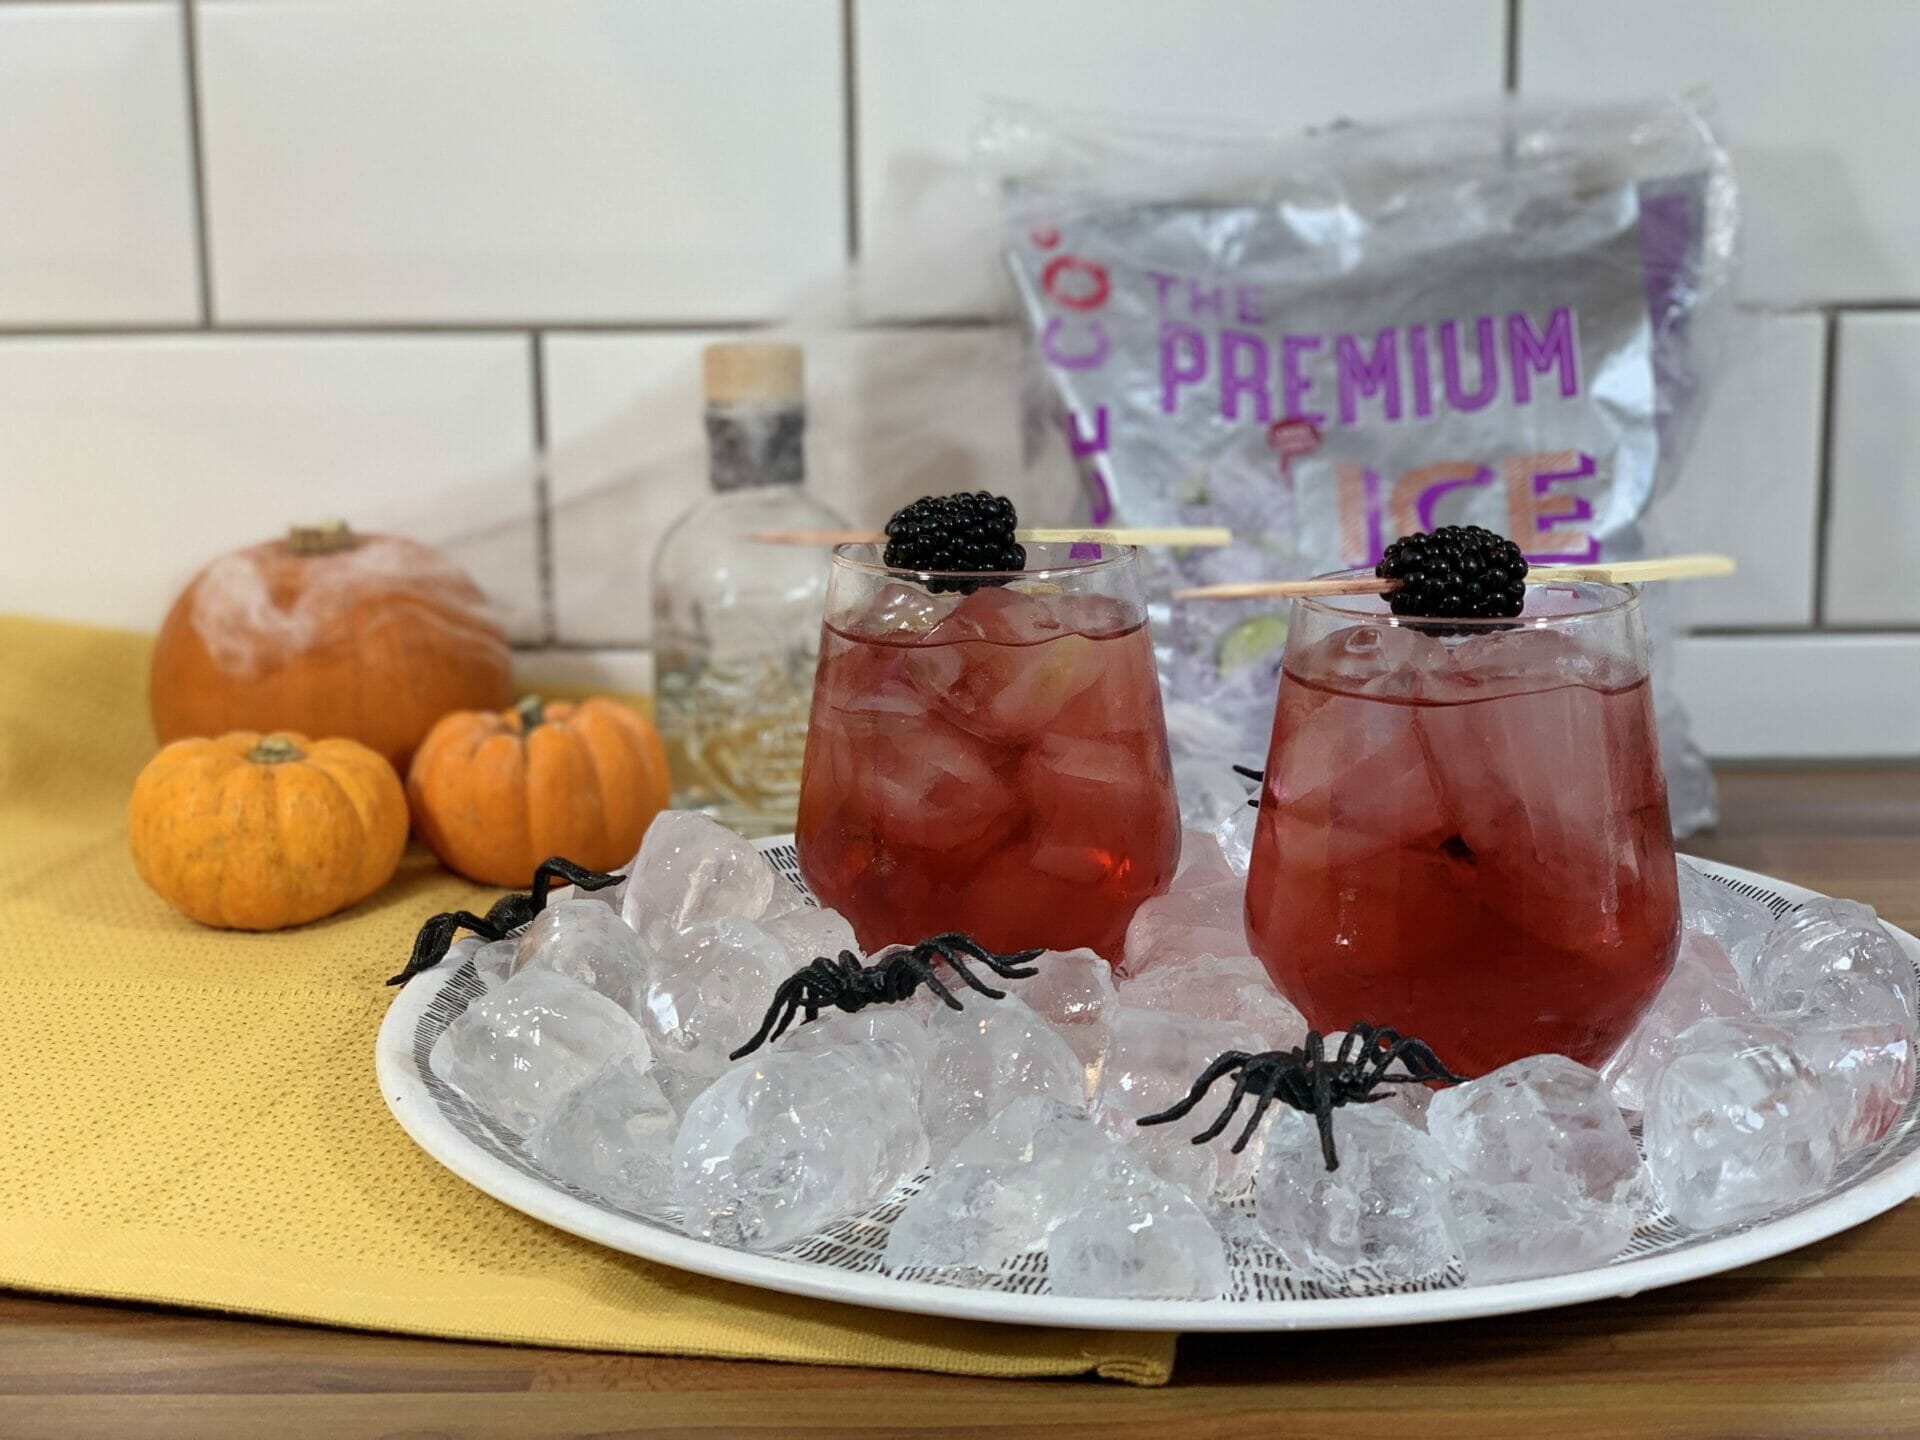 black widow cocktails in front of Premium Ice bag